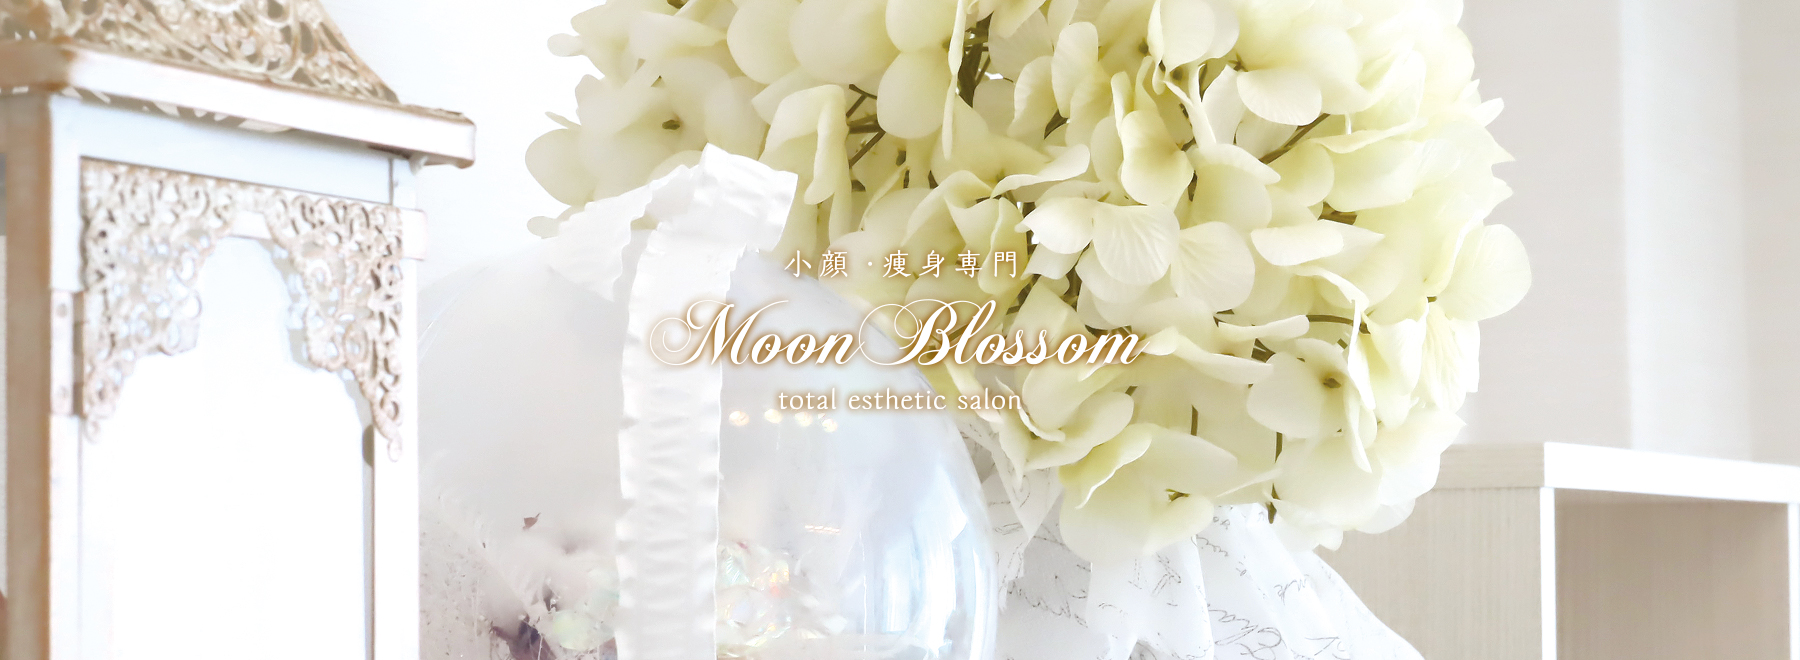 moon blossom